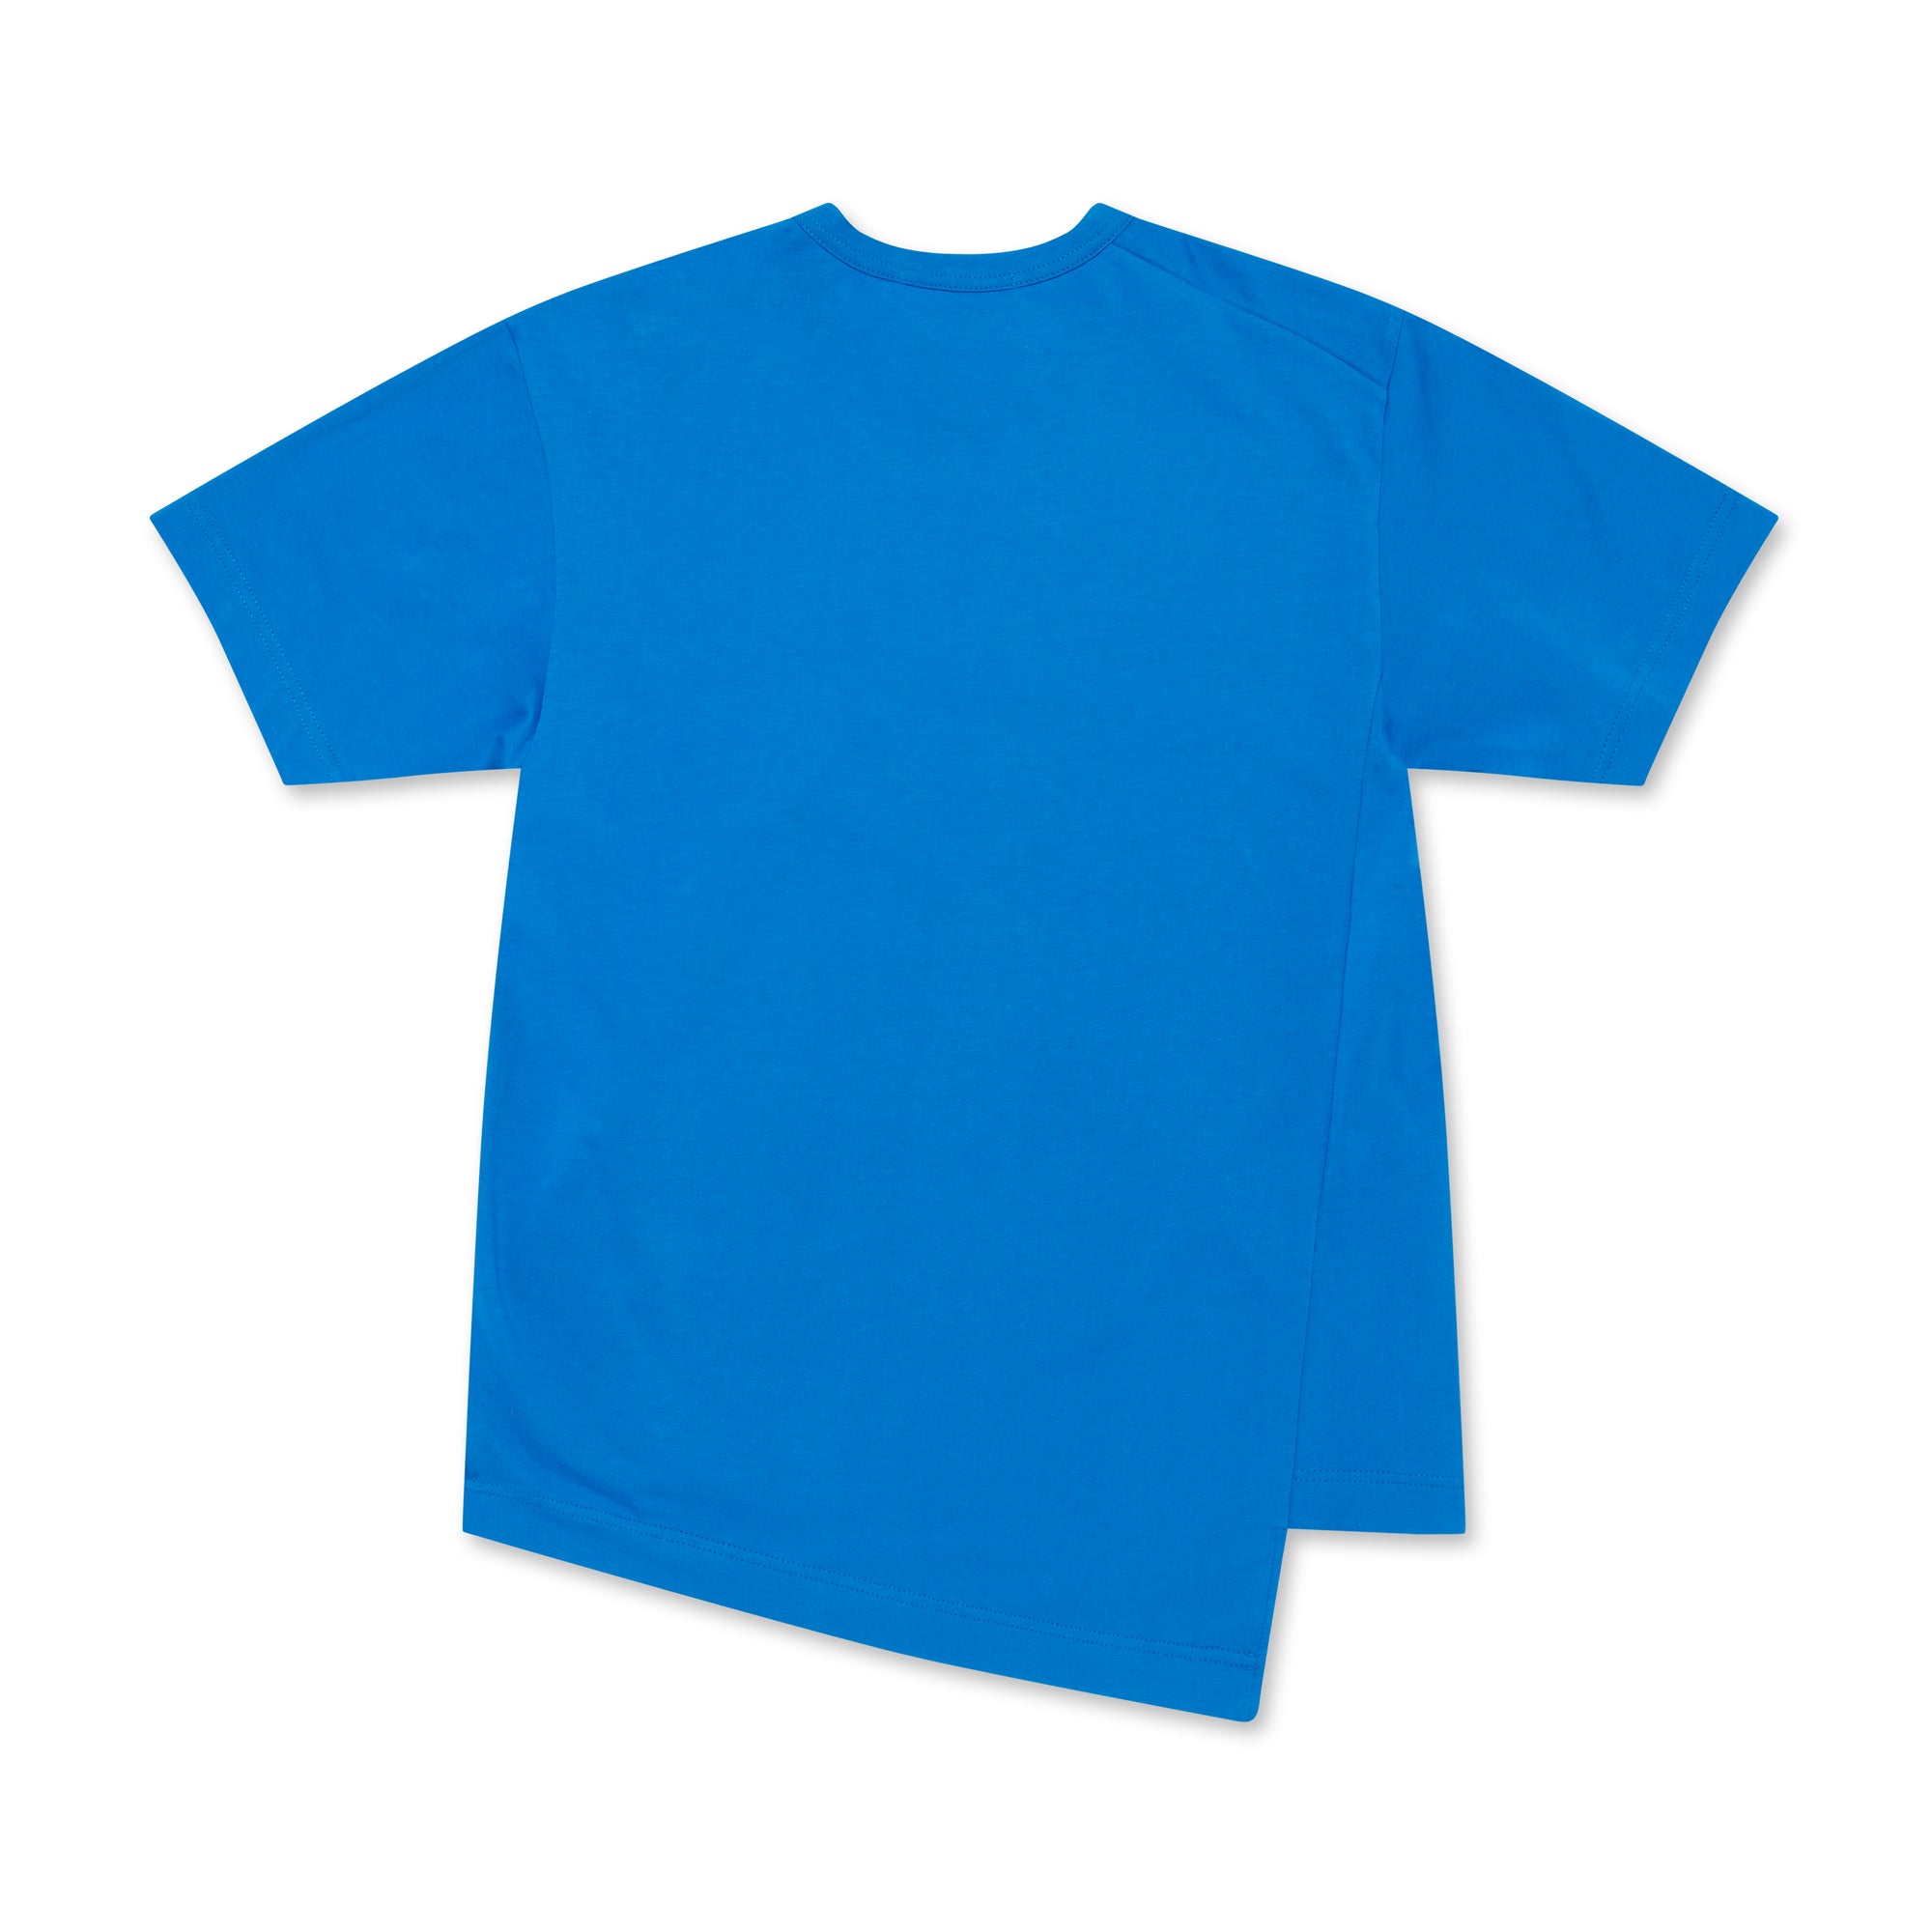 CDG Shirt - Lacoste Men's T-Shirt - (Blue) view 6